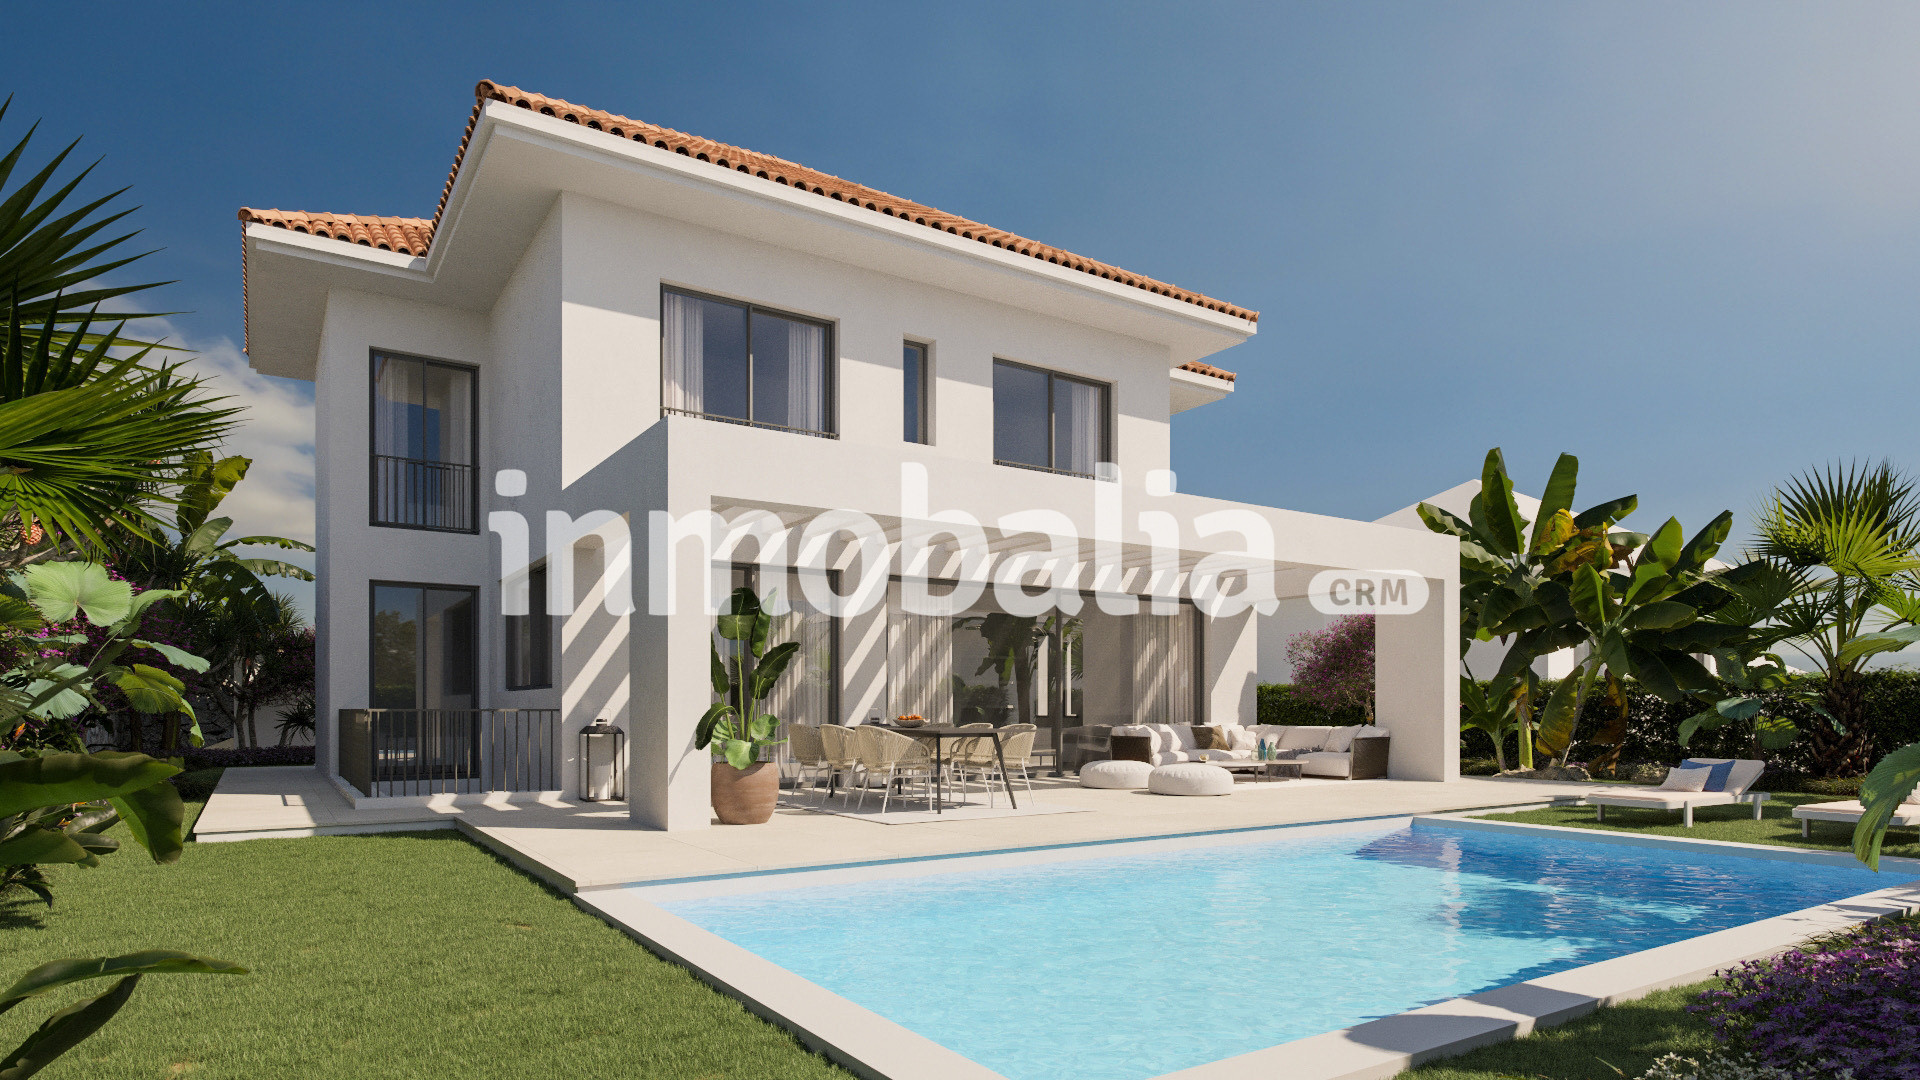 Off-plan modern villas for sale in Calahonda - Mijas Costa